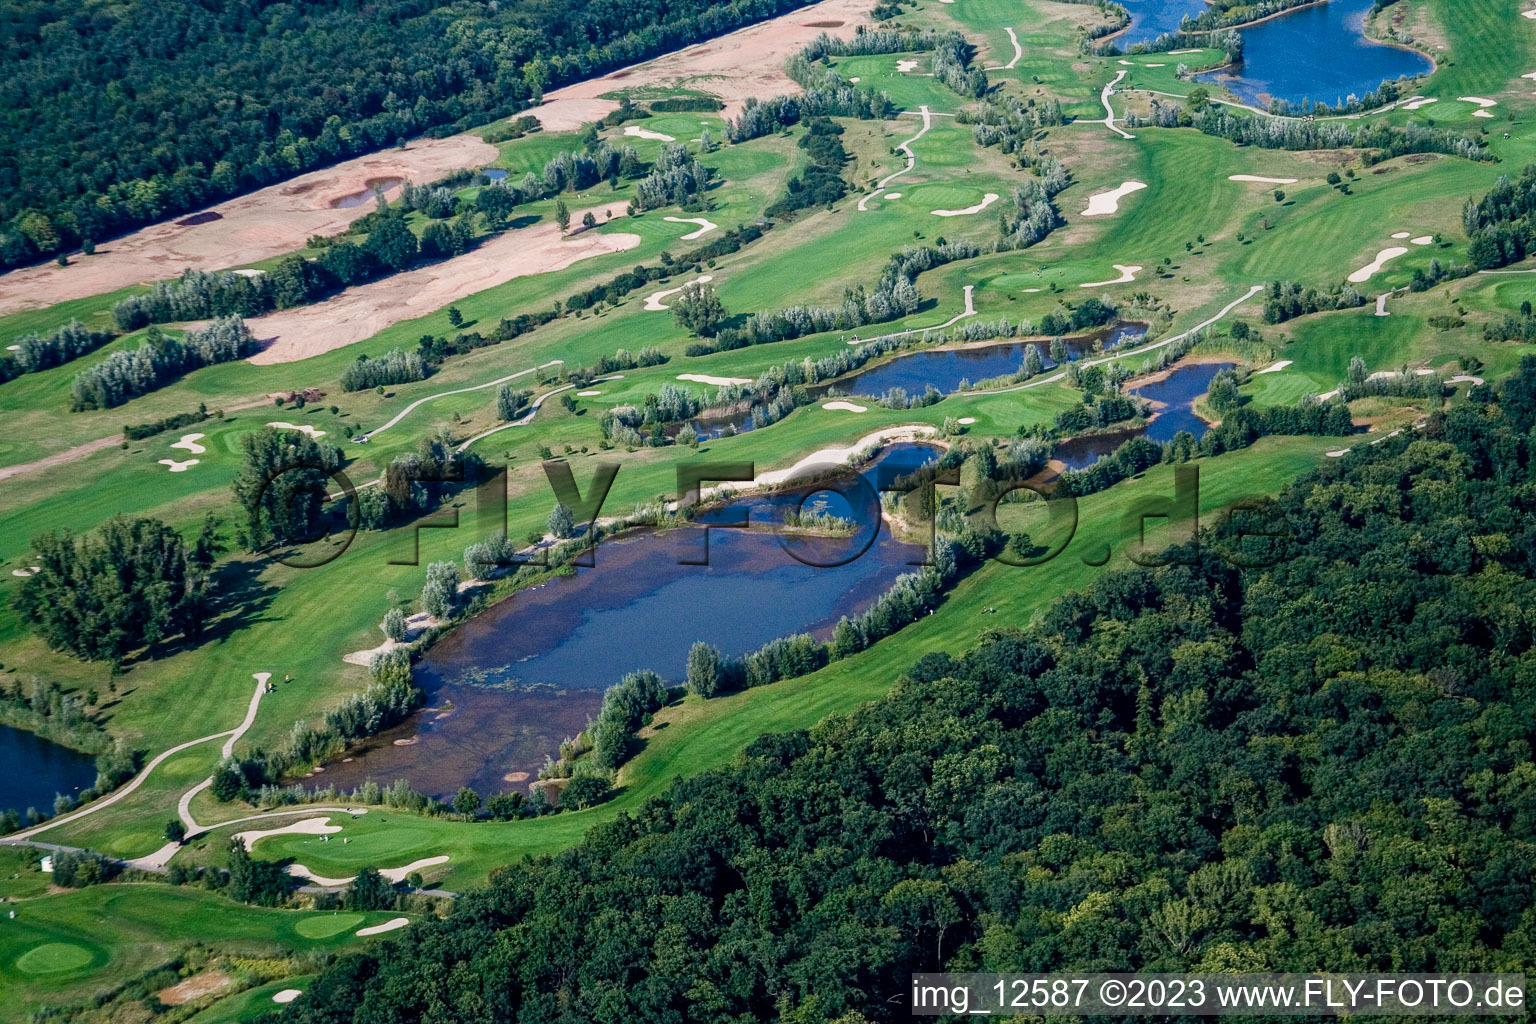 Golf Club Landgut Dreihof SÜW in Essingen in the state Rhineland-Palatinate, Germany from above